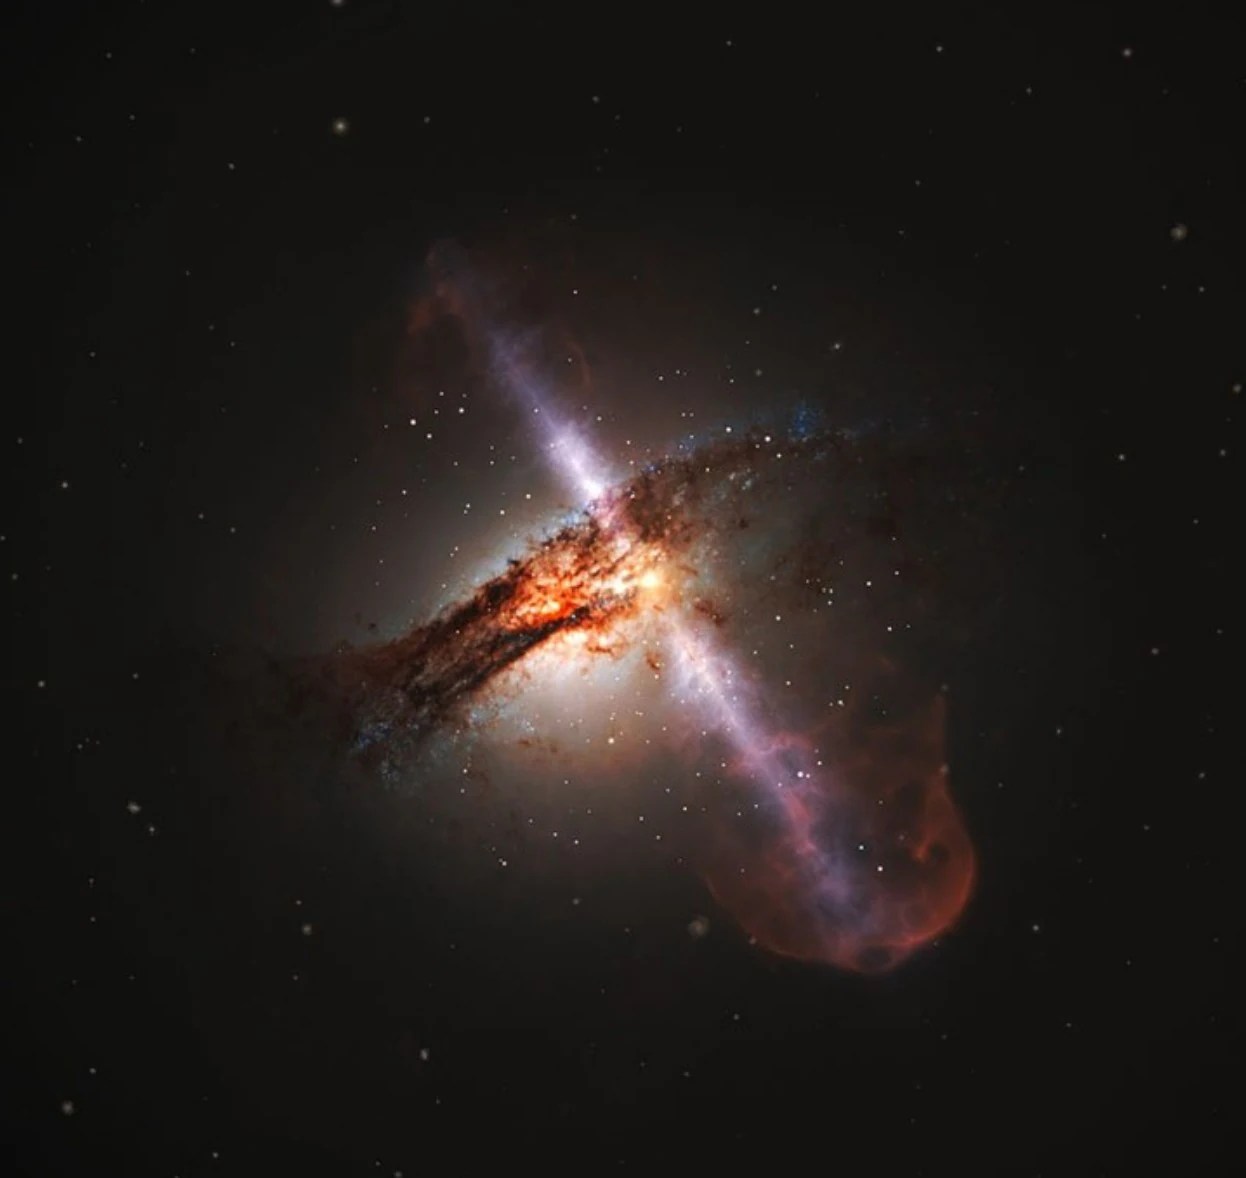 Centaurus A galaxy facing tidal disruptions due to black hole